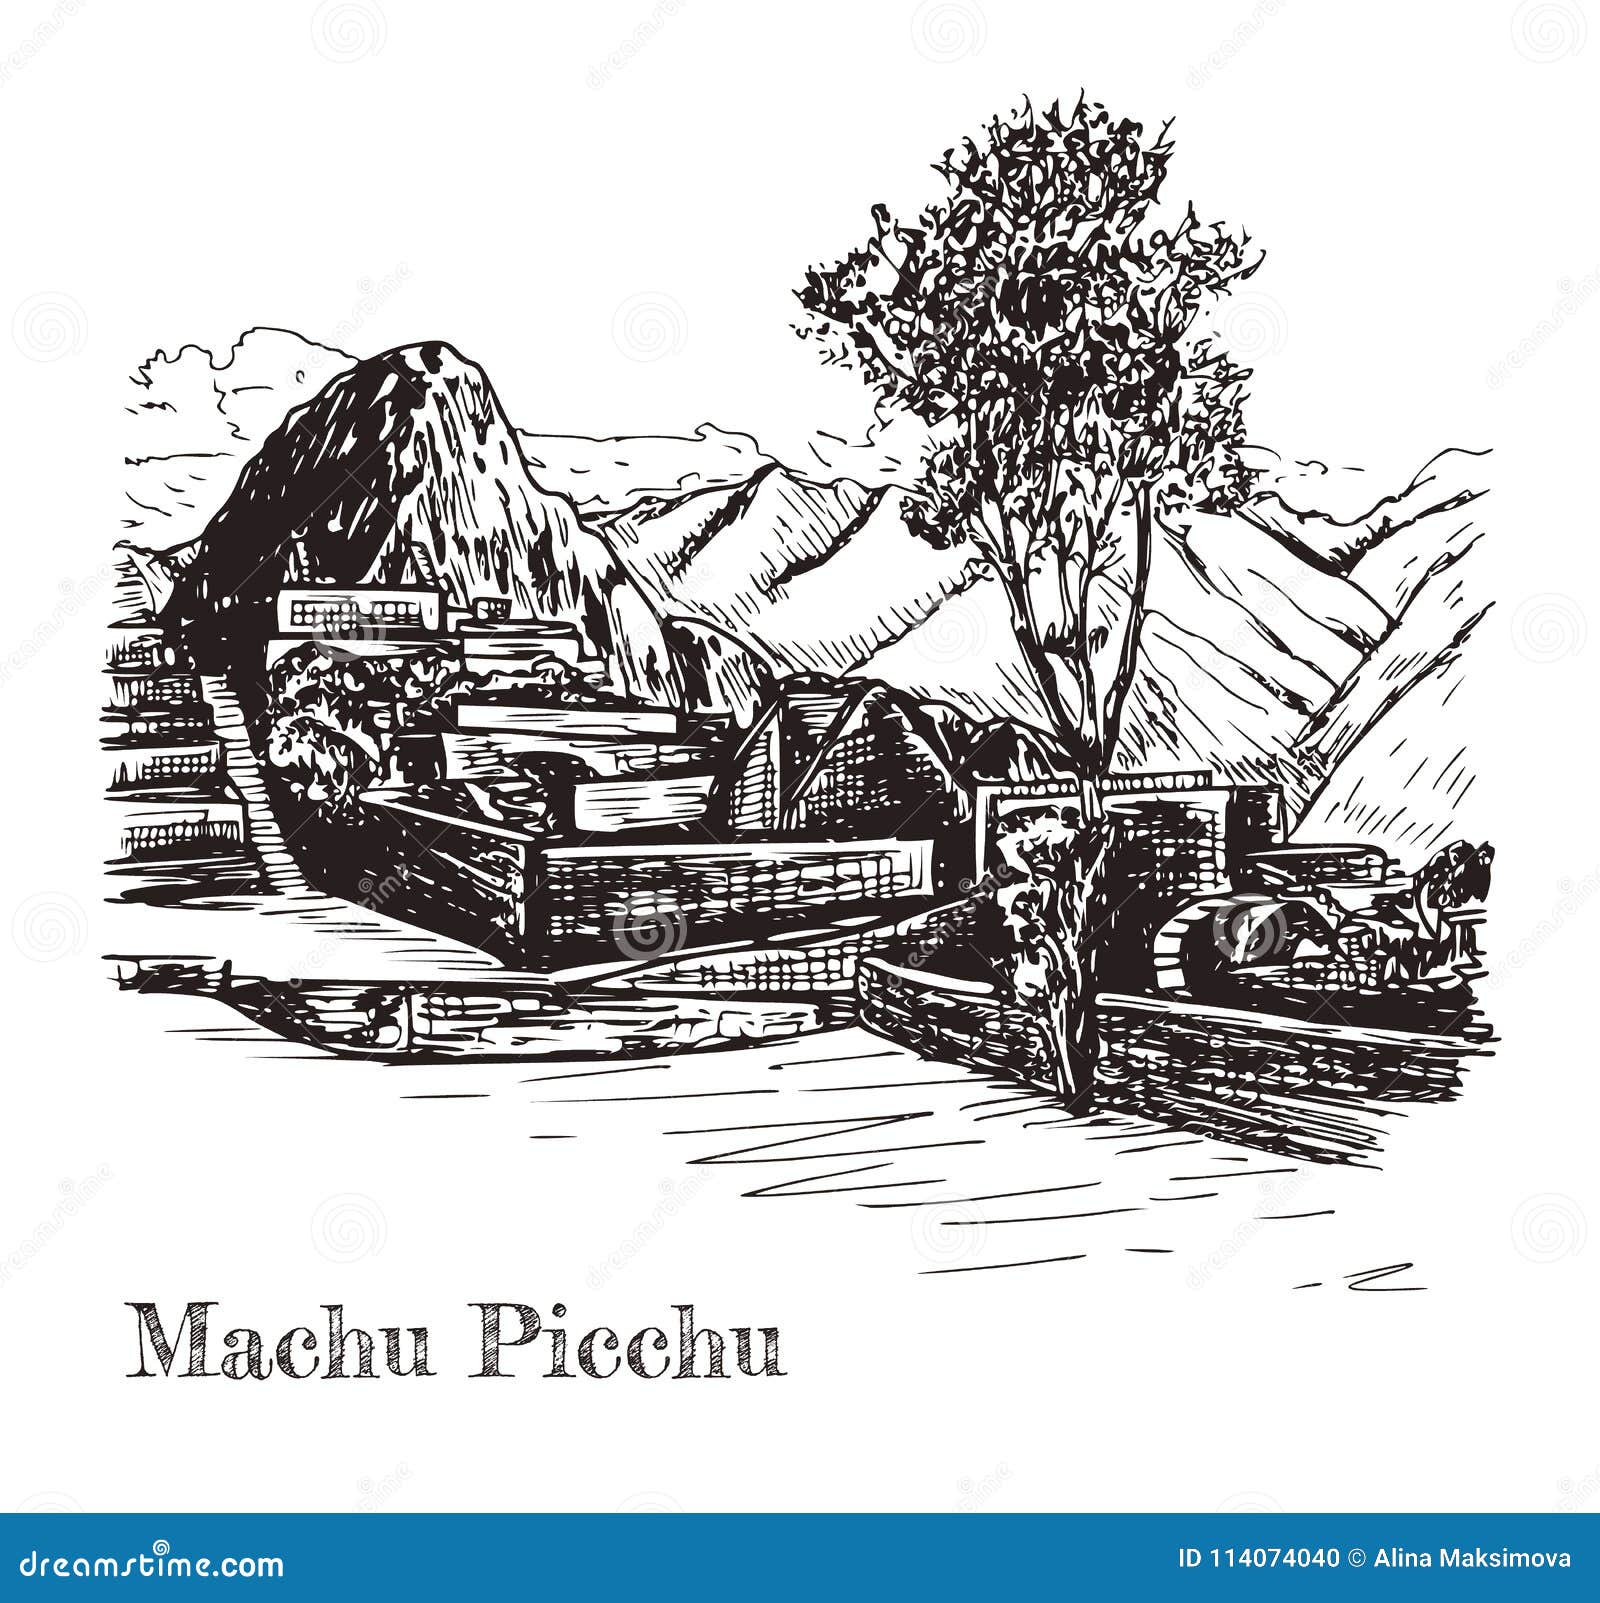 Machu Picchu Lesson: Teach about the Incas in Peru! Reading, Crossword,  Coloring